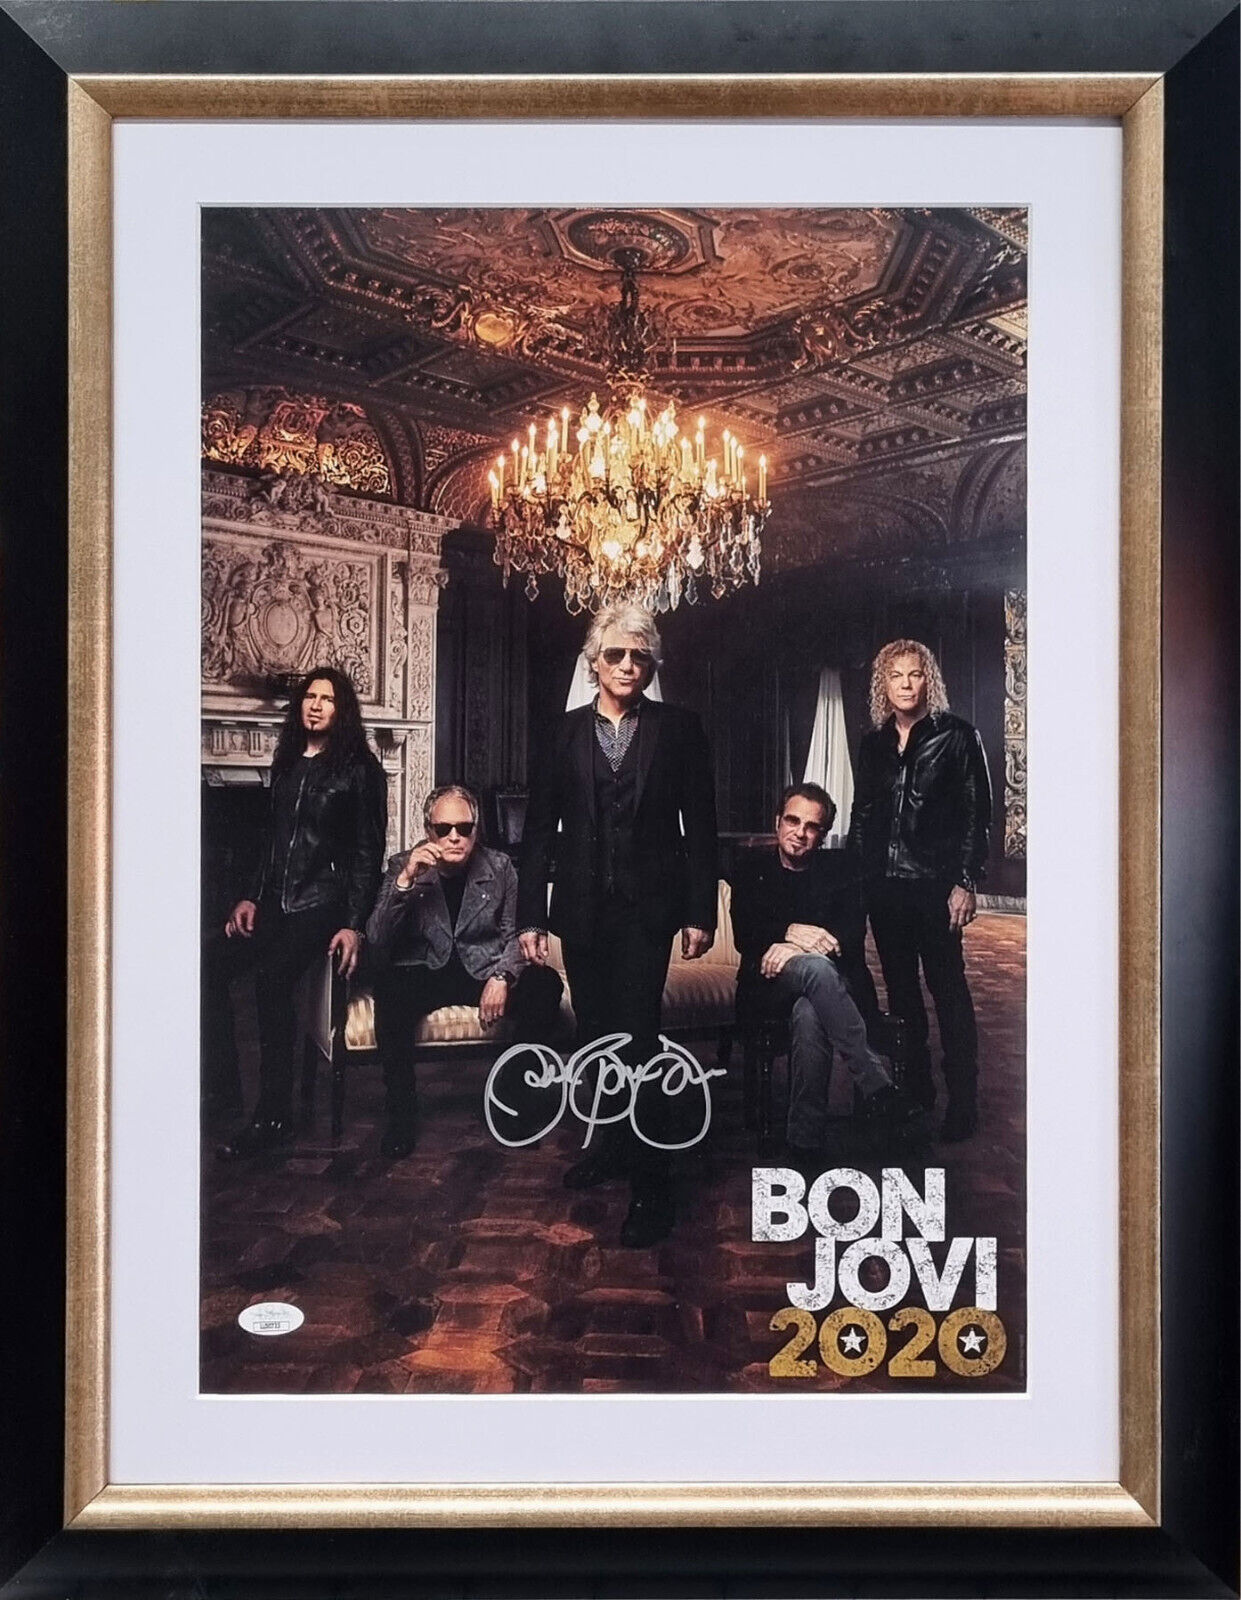 Jon Bon Jovi Signed & Framed 16x20 inch Photograph (James Spence JSA #LL00733)